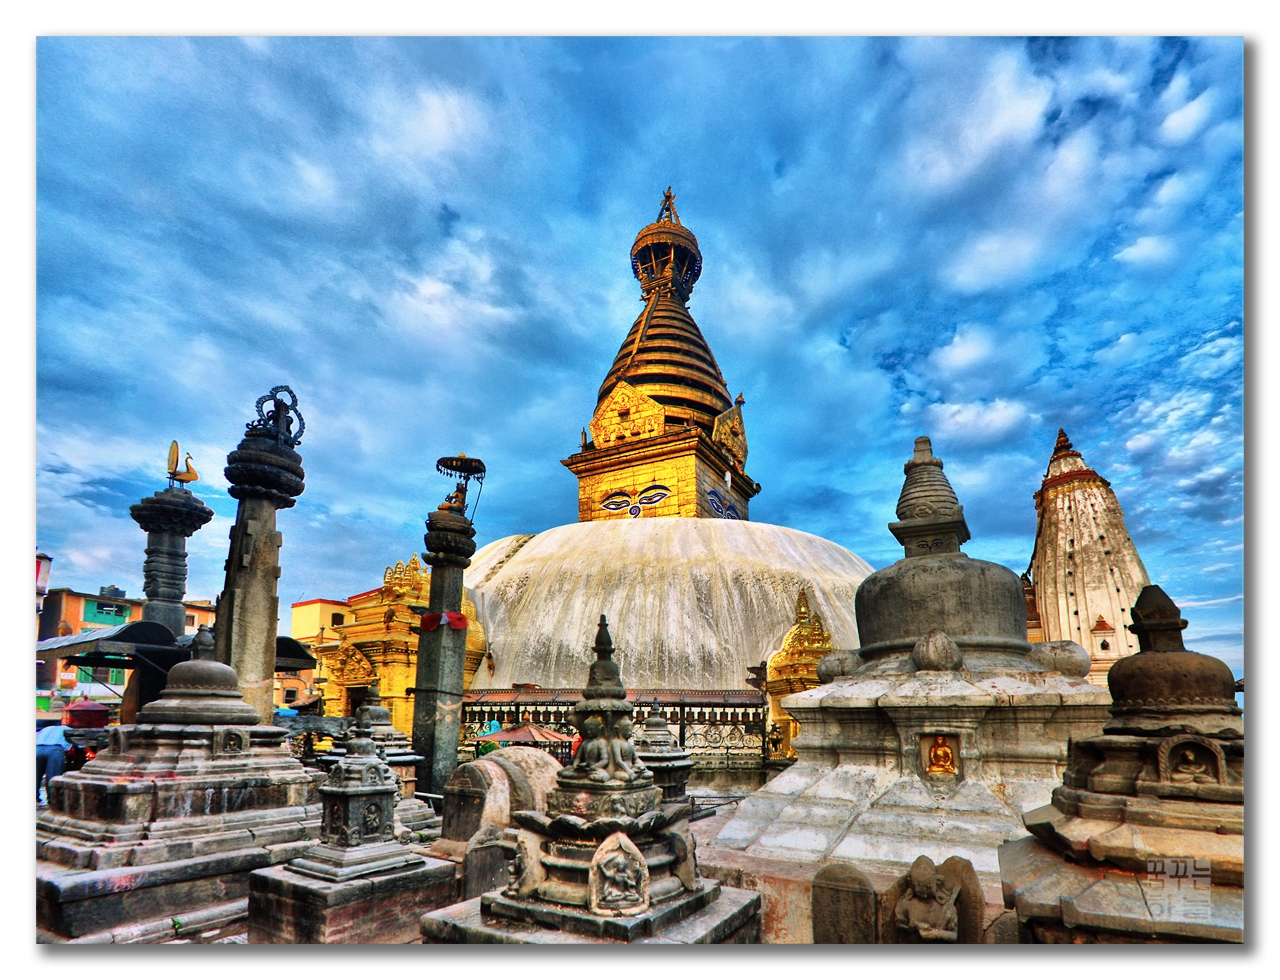 http://www.the-journeys.com/photoes/Kathmandu-HDR-TheDreamSky2775.jpg  